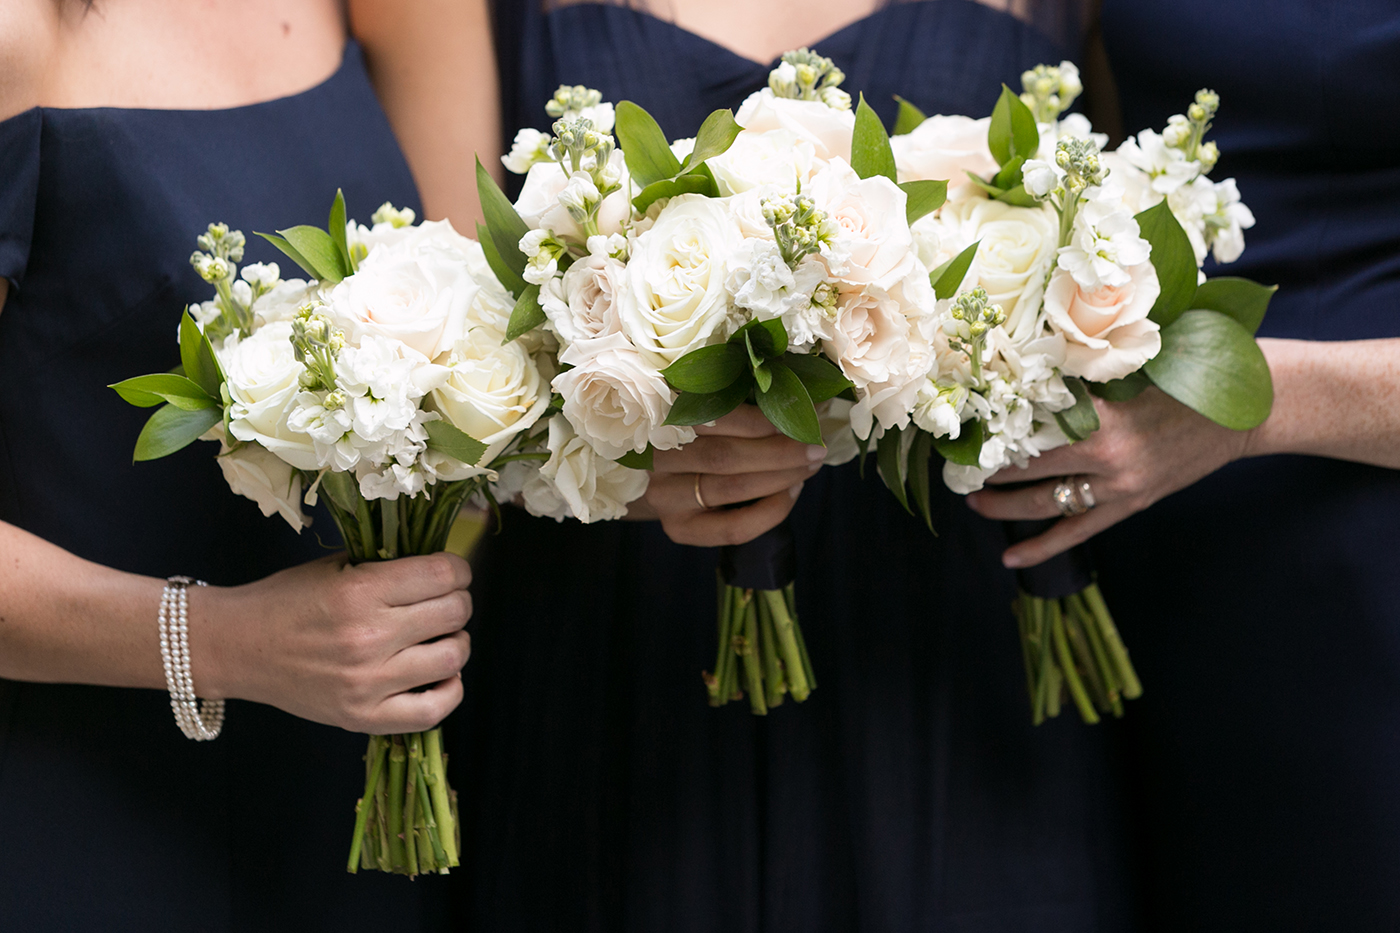 Classic Wedding Flowers Dallas Wedding Florist - A Stylish Soiree - Scottish Rite Cathedral